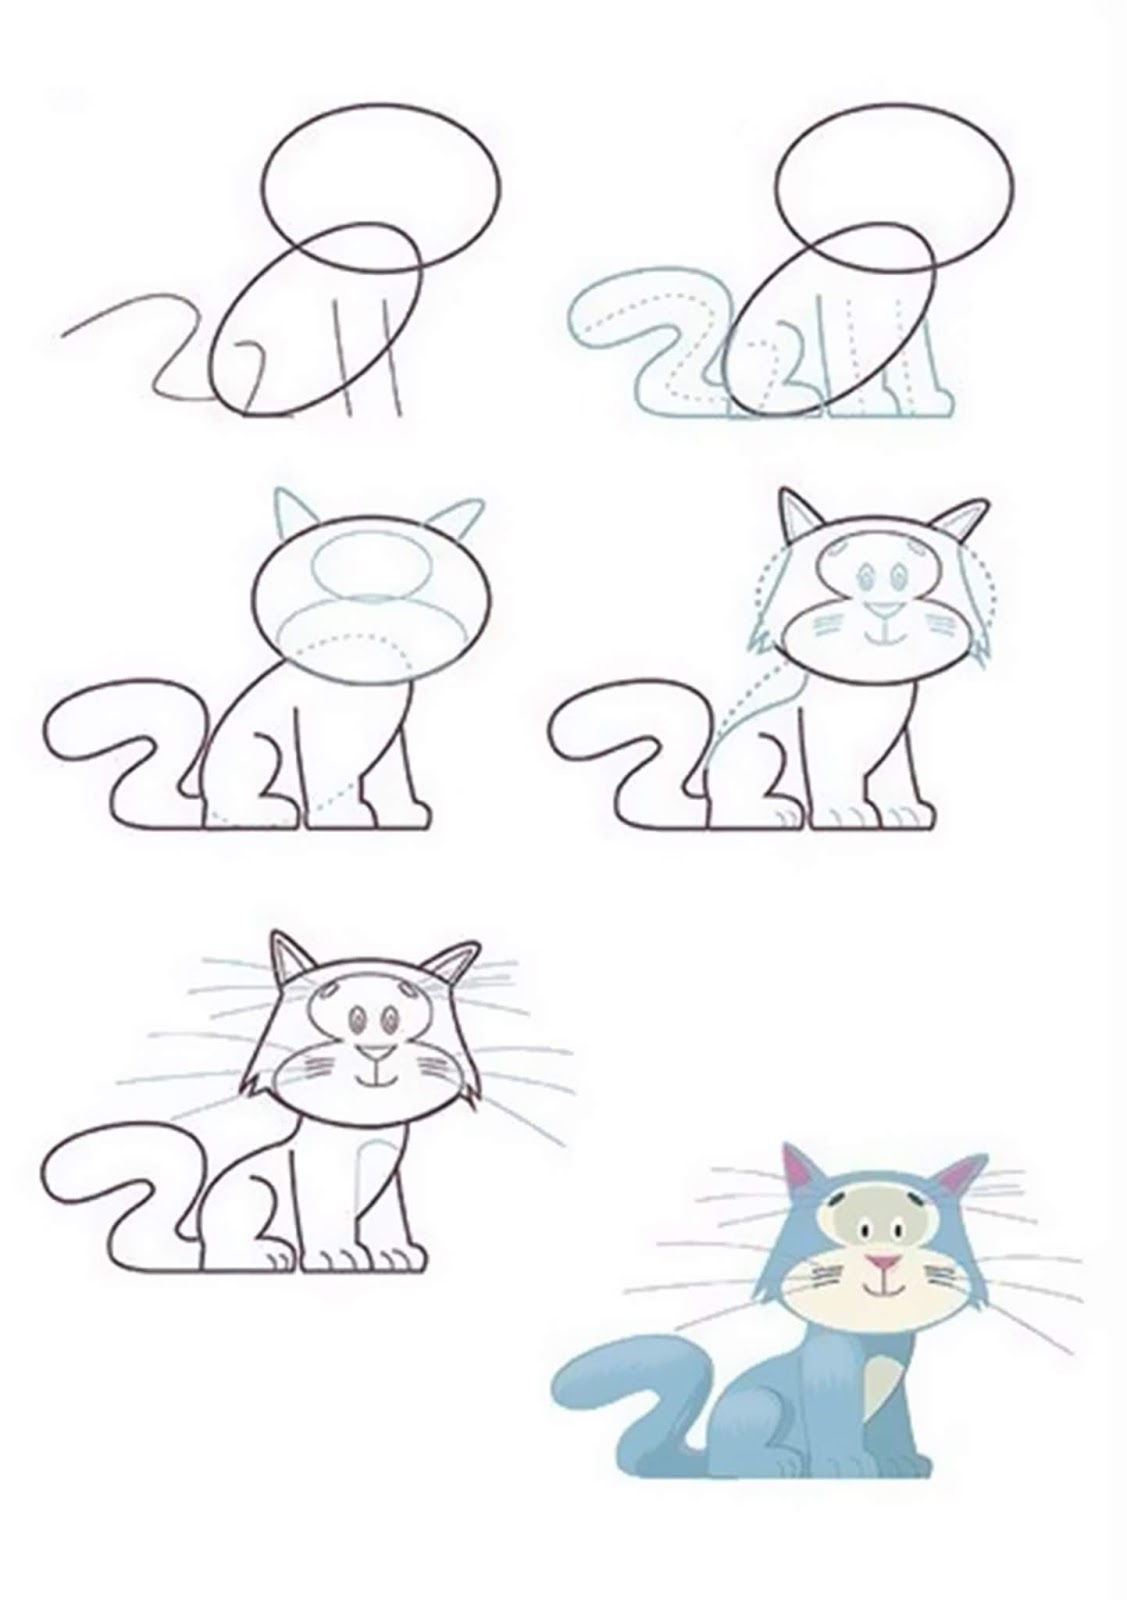 easy animal drawings step by step easy animal drawings cute easy animal drawings for beginners